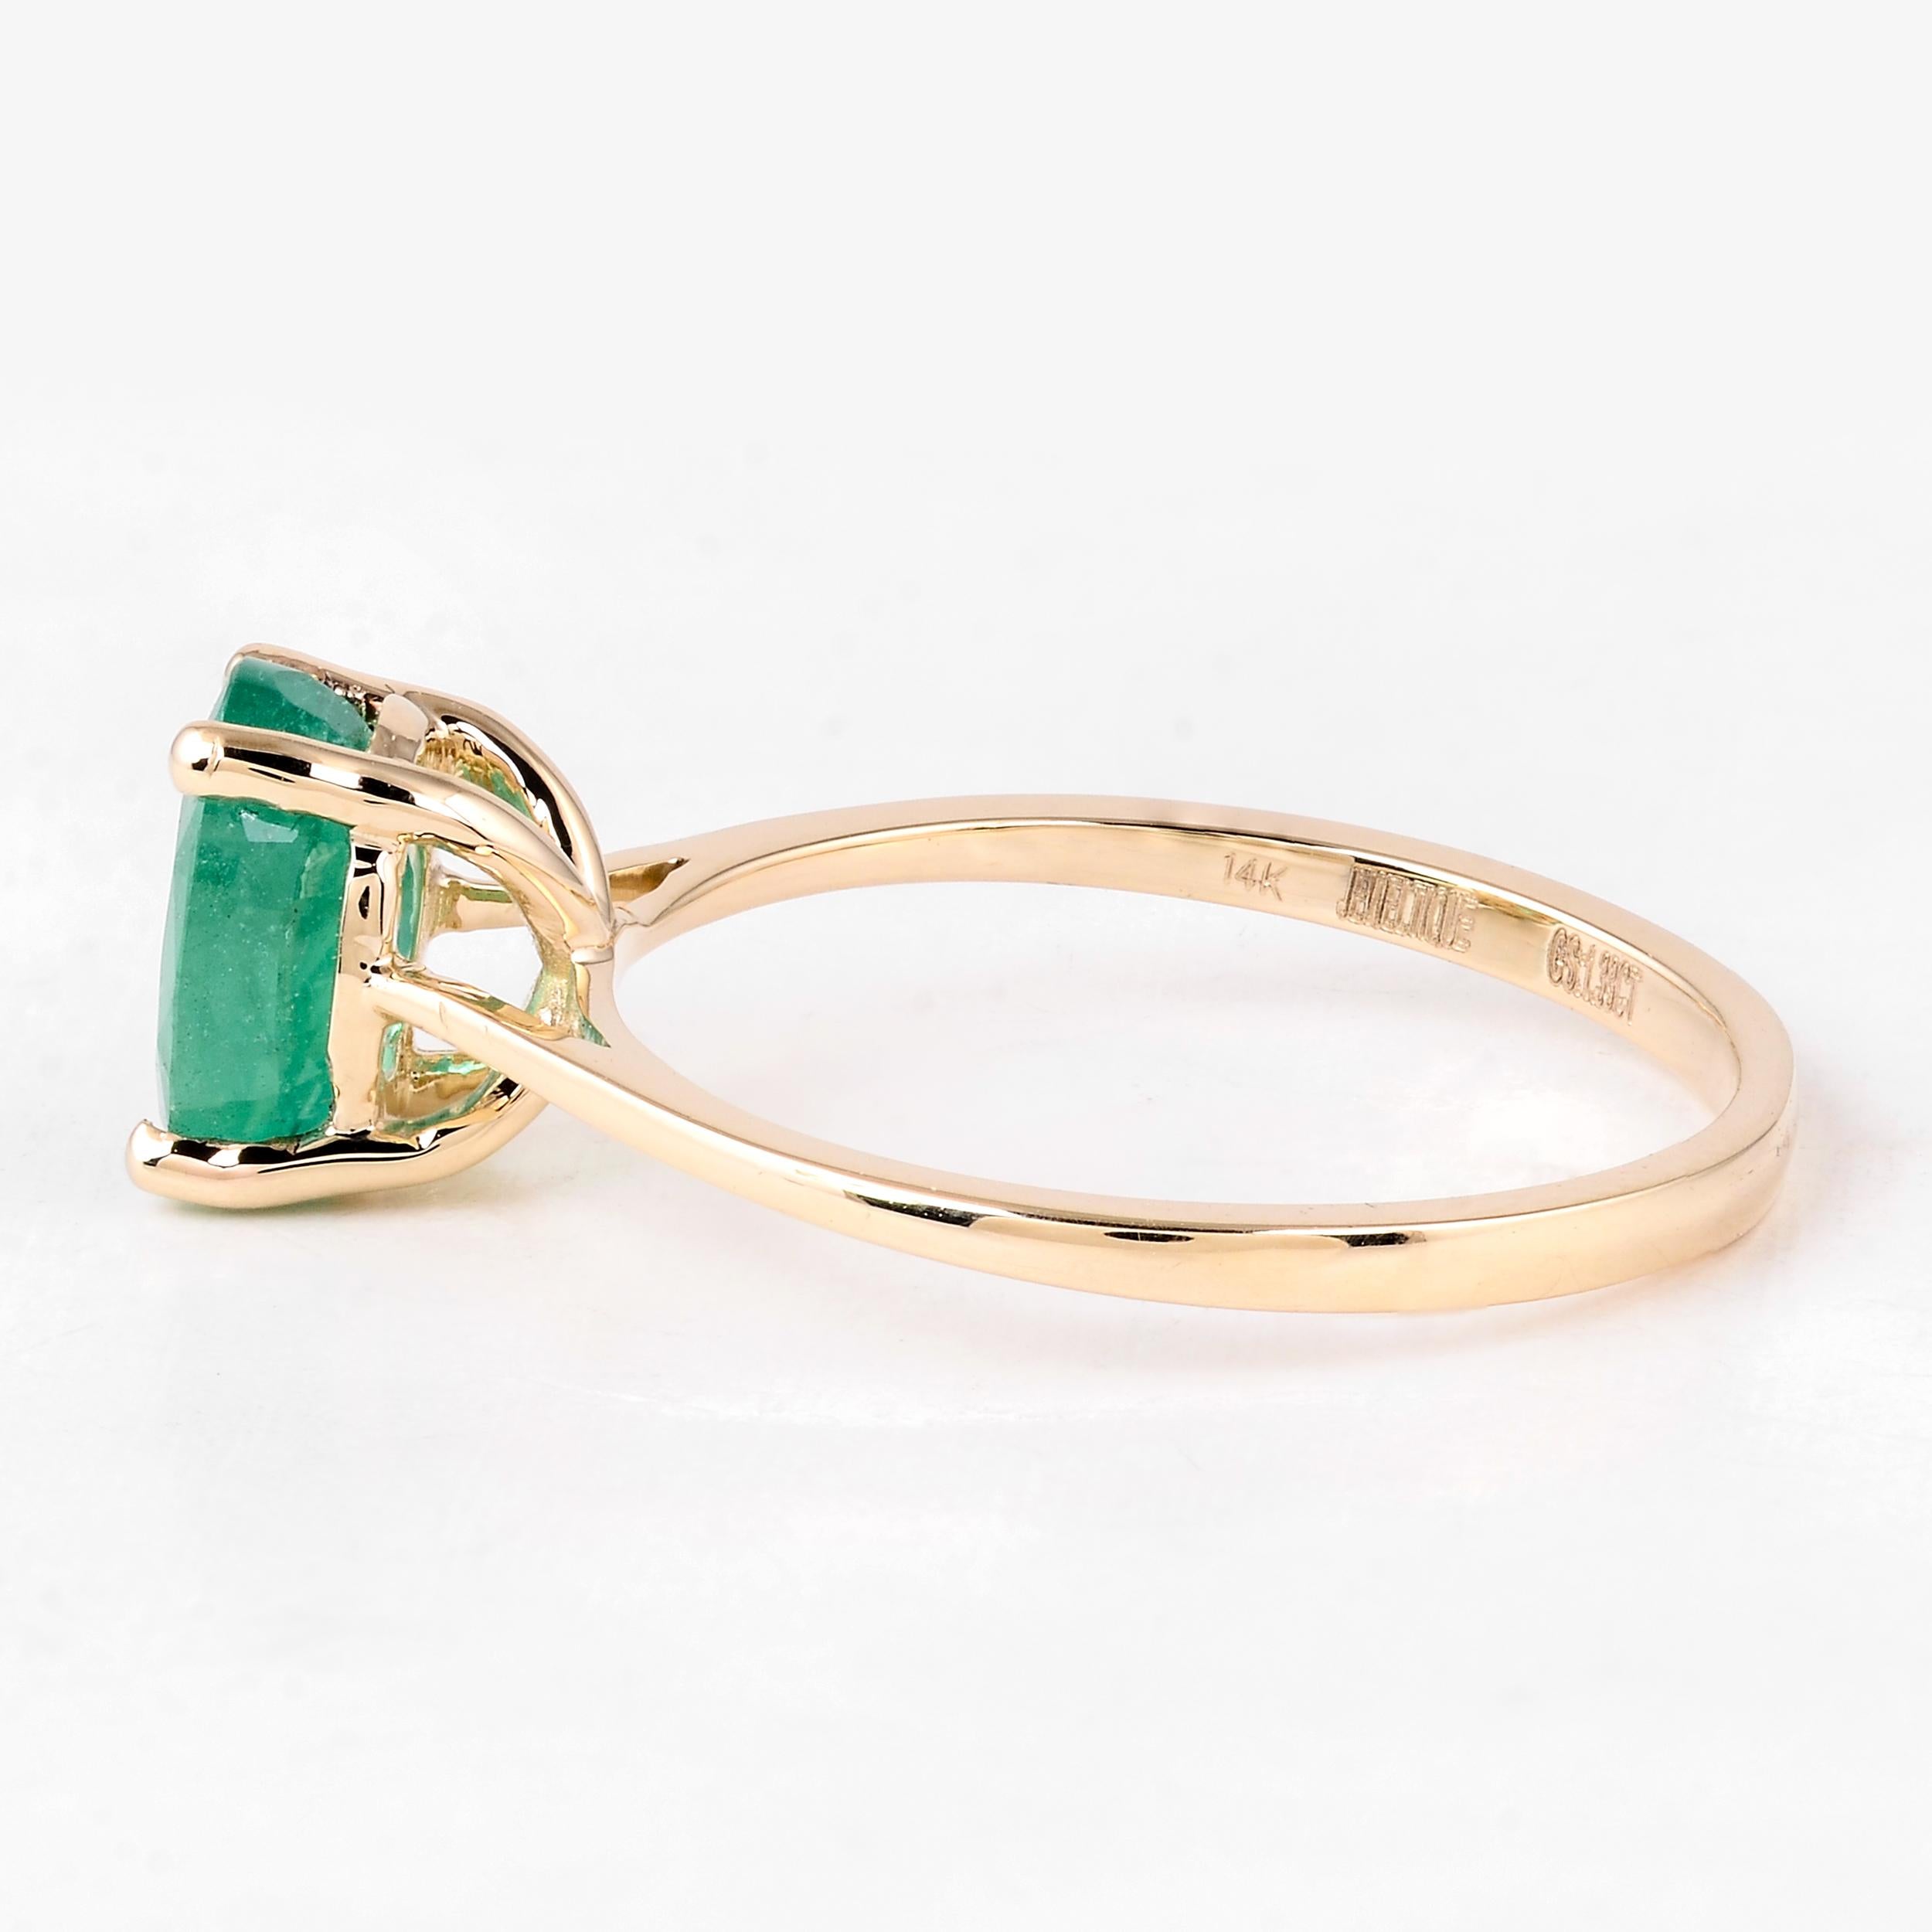 Elegant 14K 1.33ct Emerald Cocktail Ring, Size 7 - Timeless & Elegant Jewelry 1